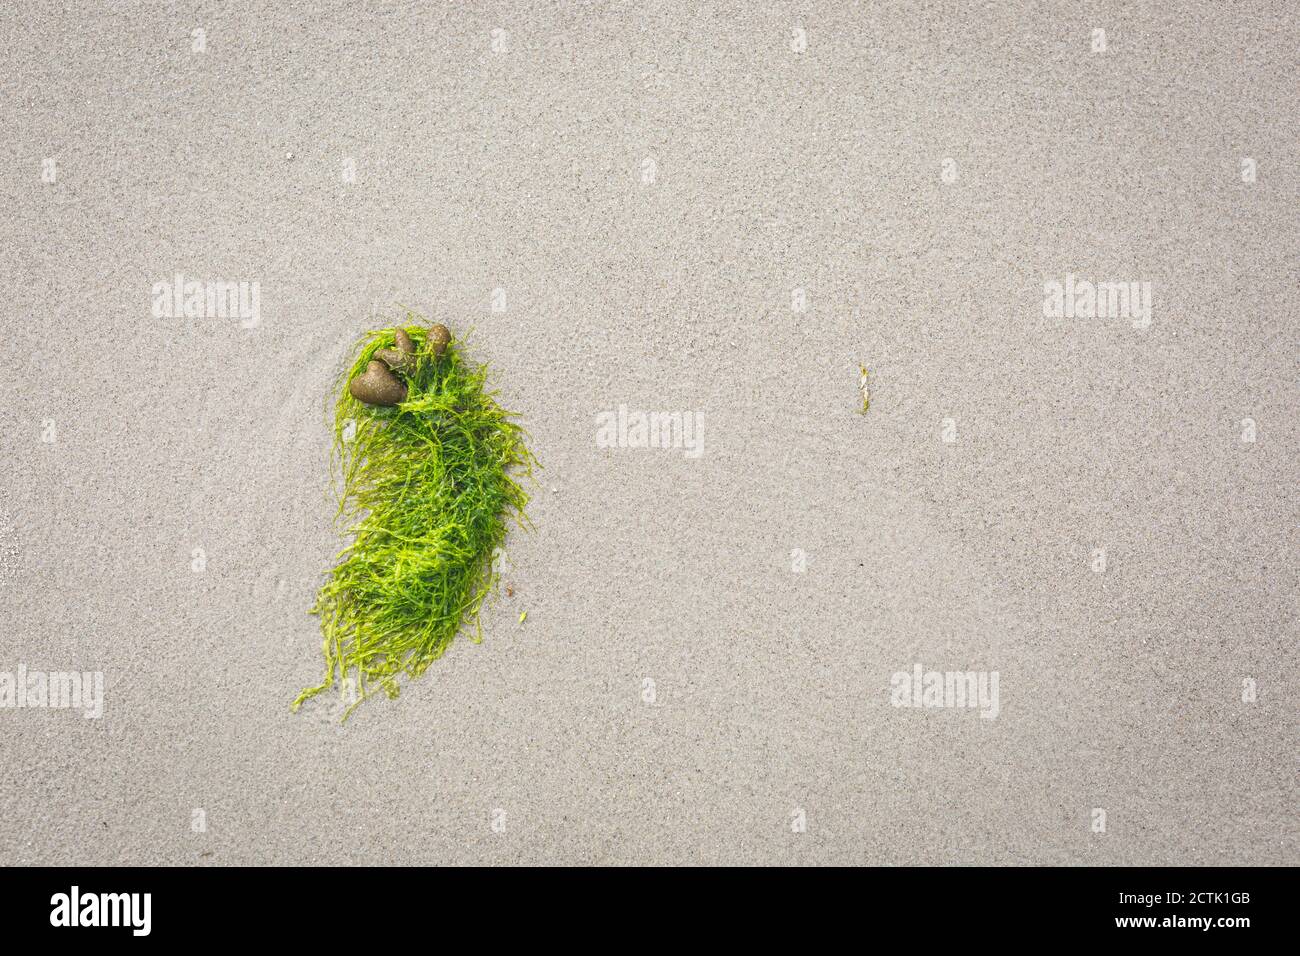 Seaweeds lying on beach sand Stock Photo